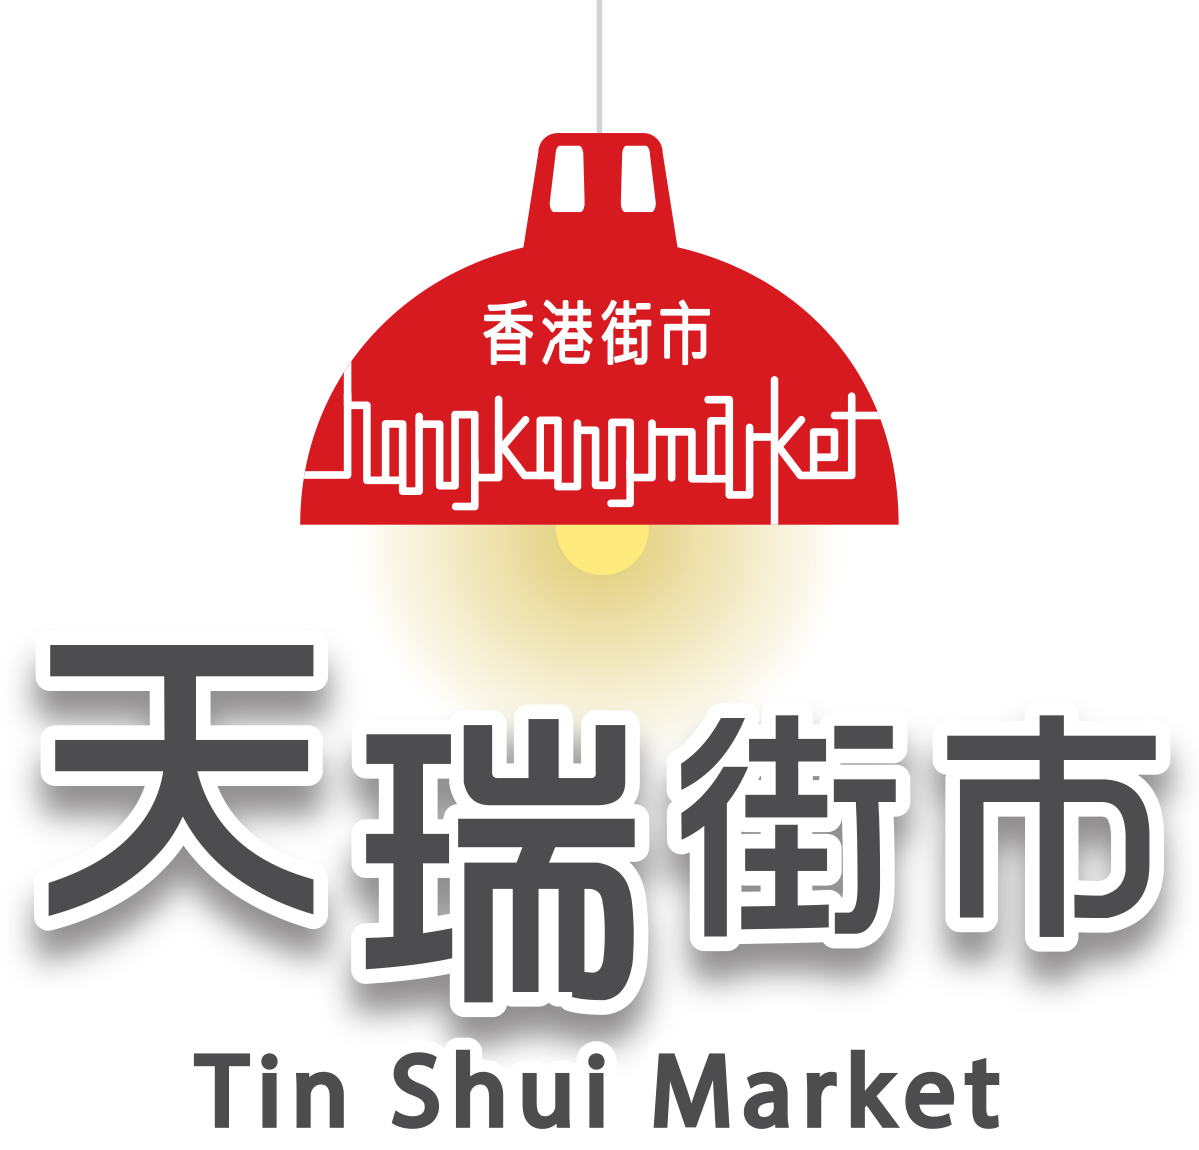 Tin Shui Market